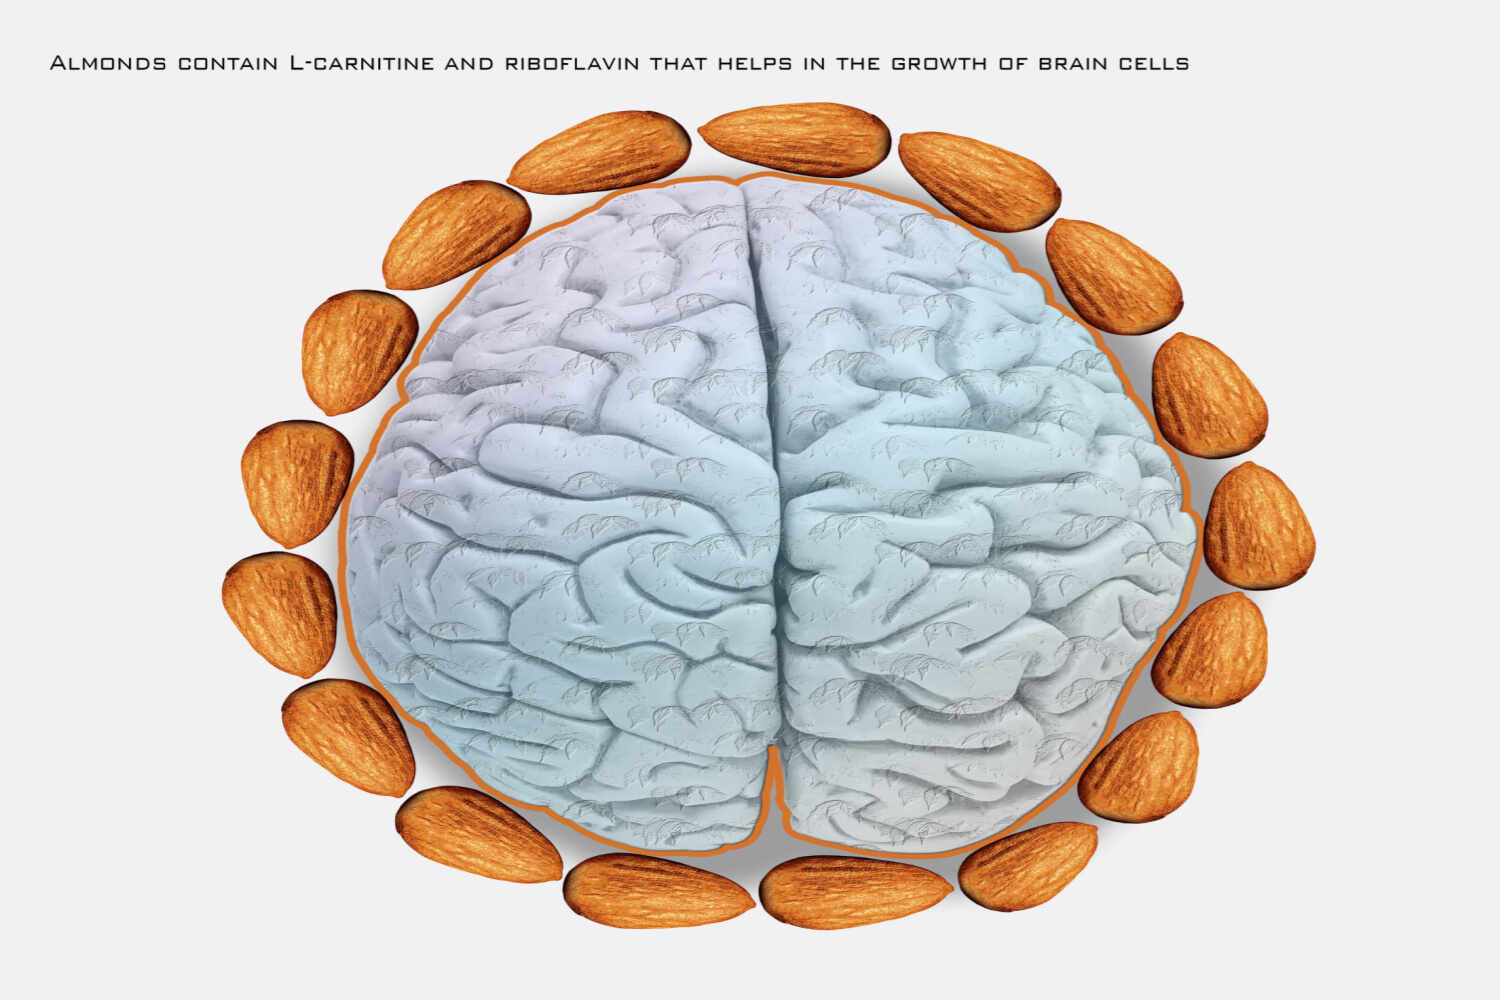 Almonds improve brain function